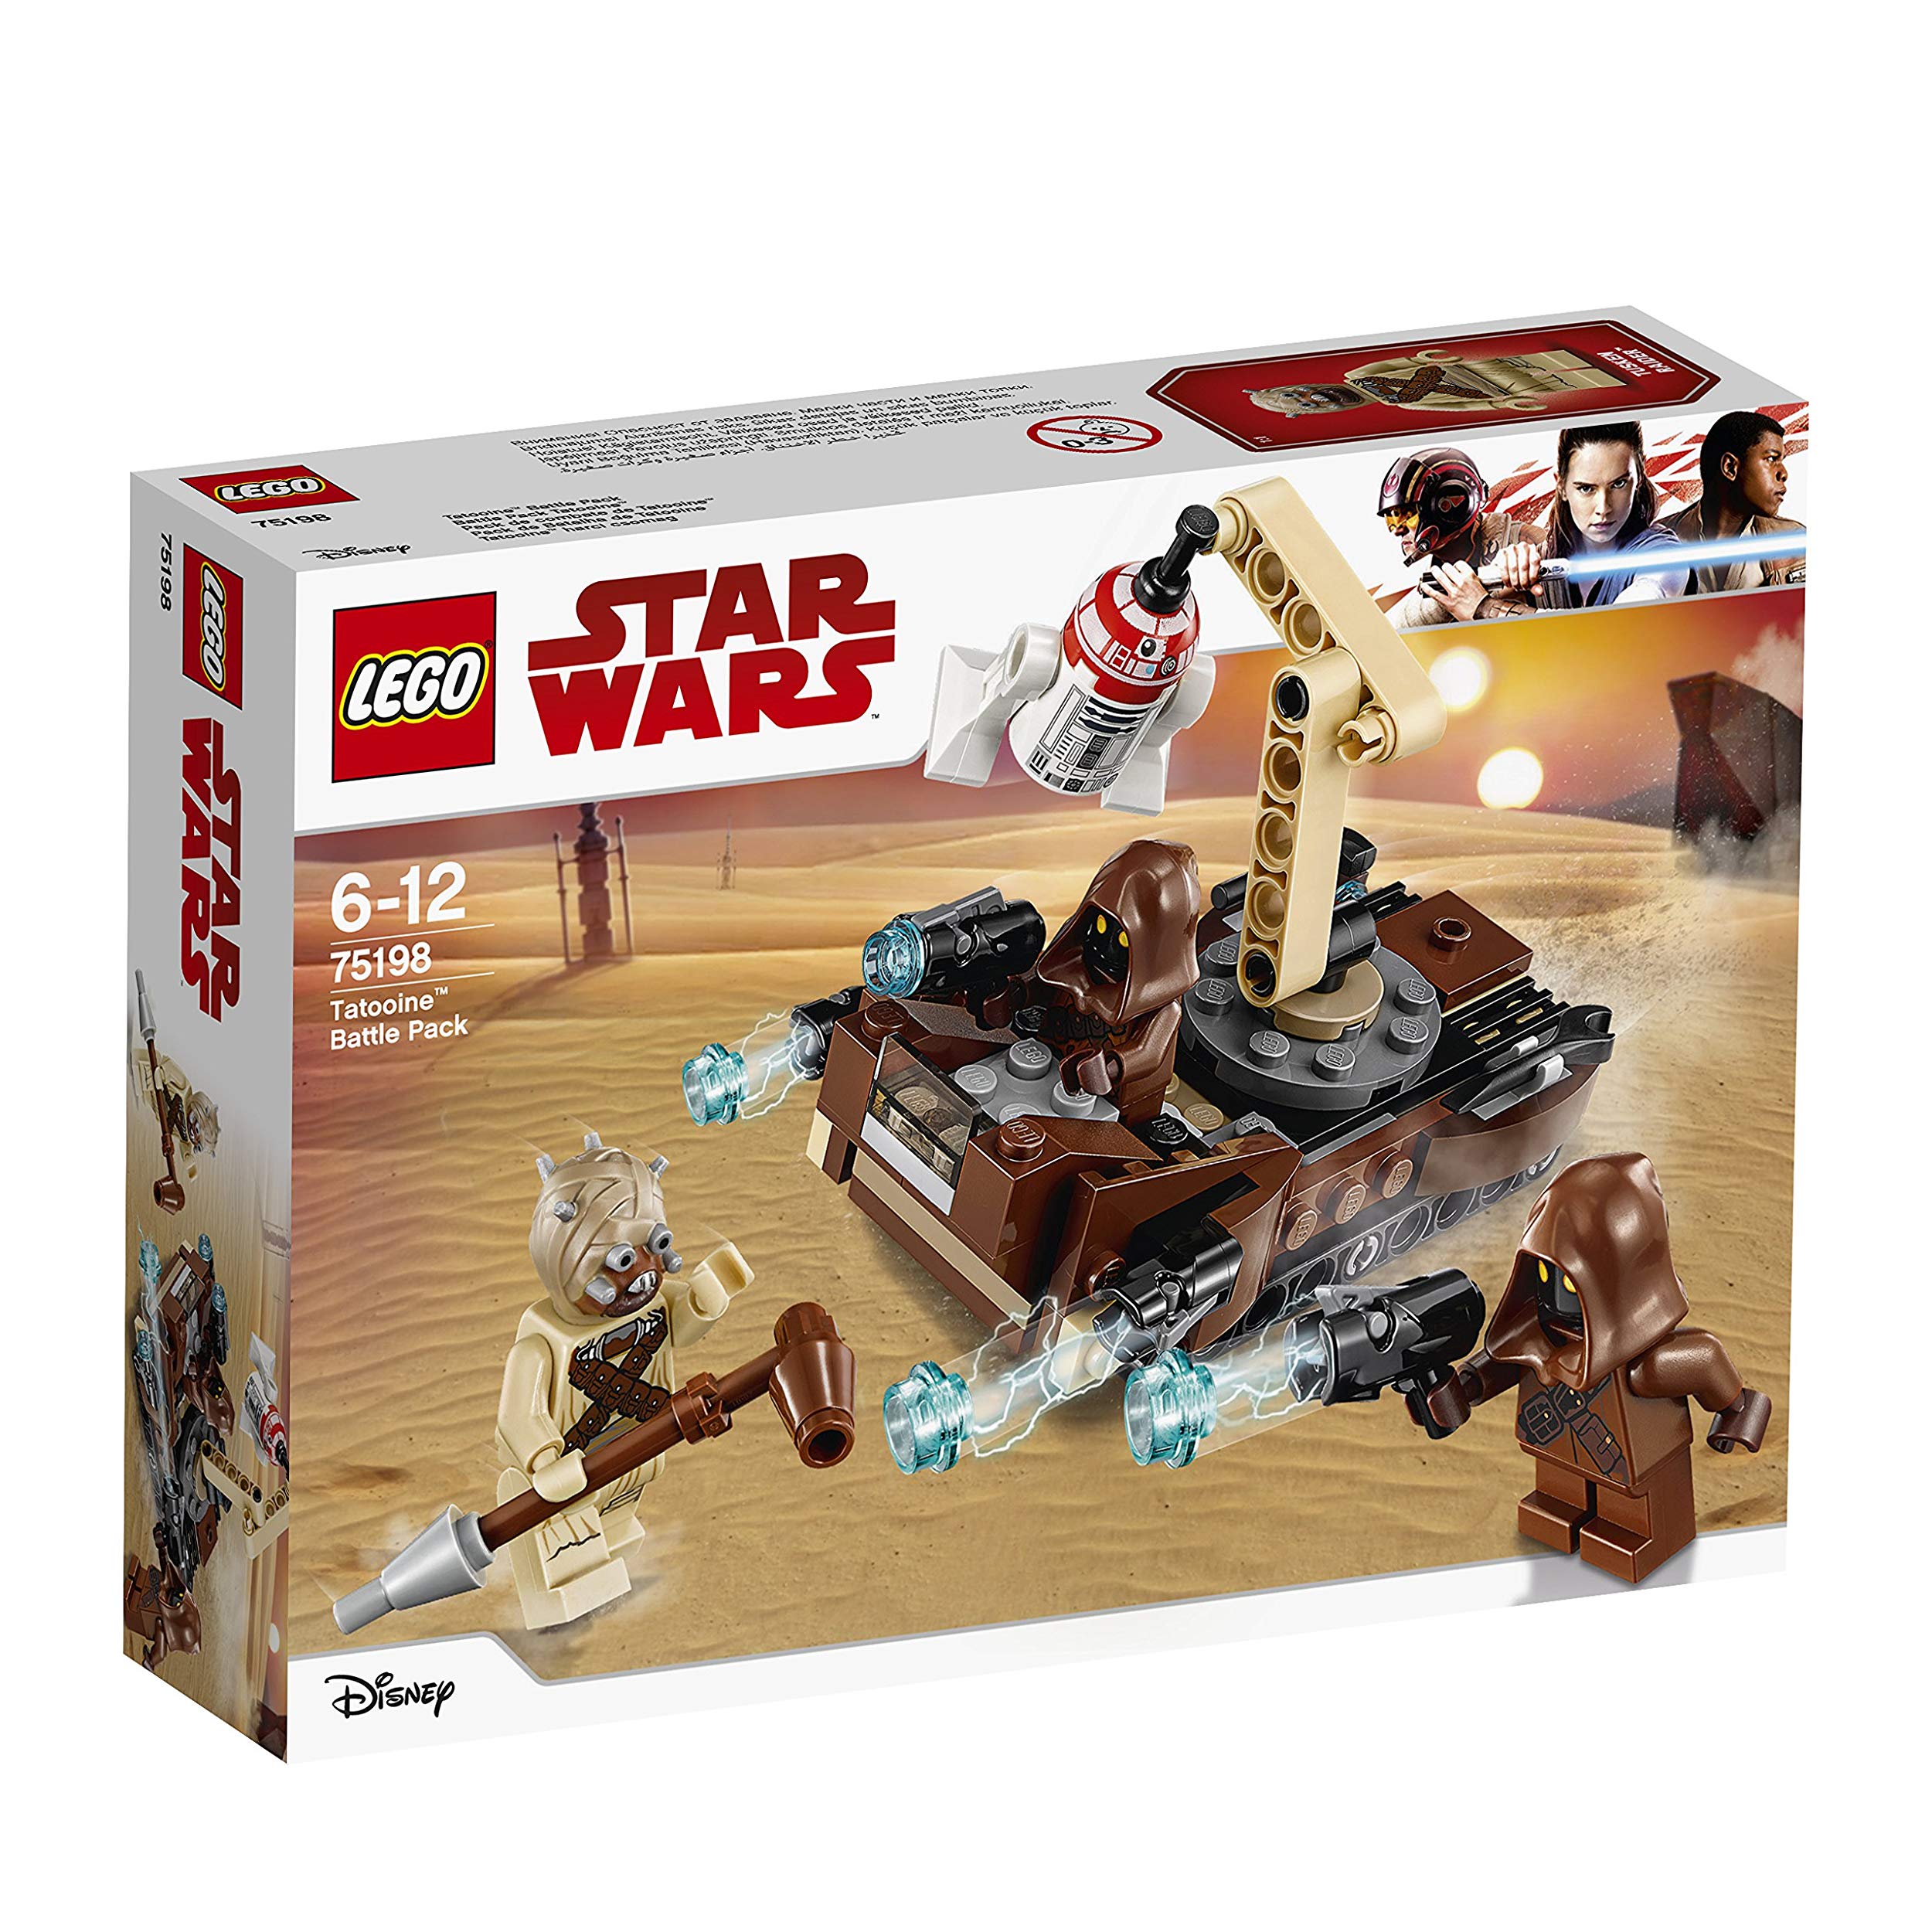 Lego Star Wars Tatooine Battle Pack Toy